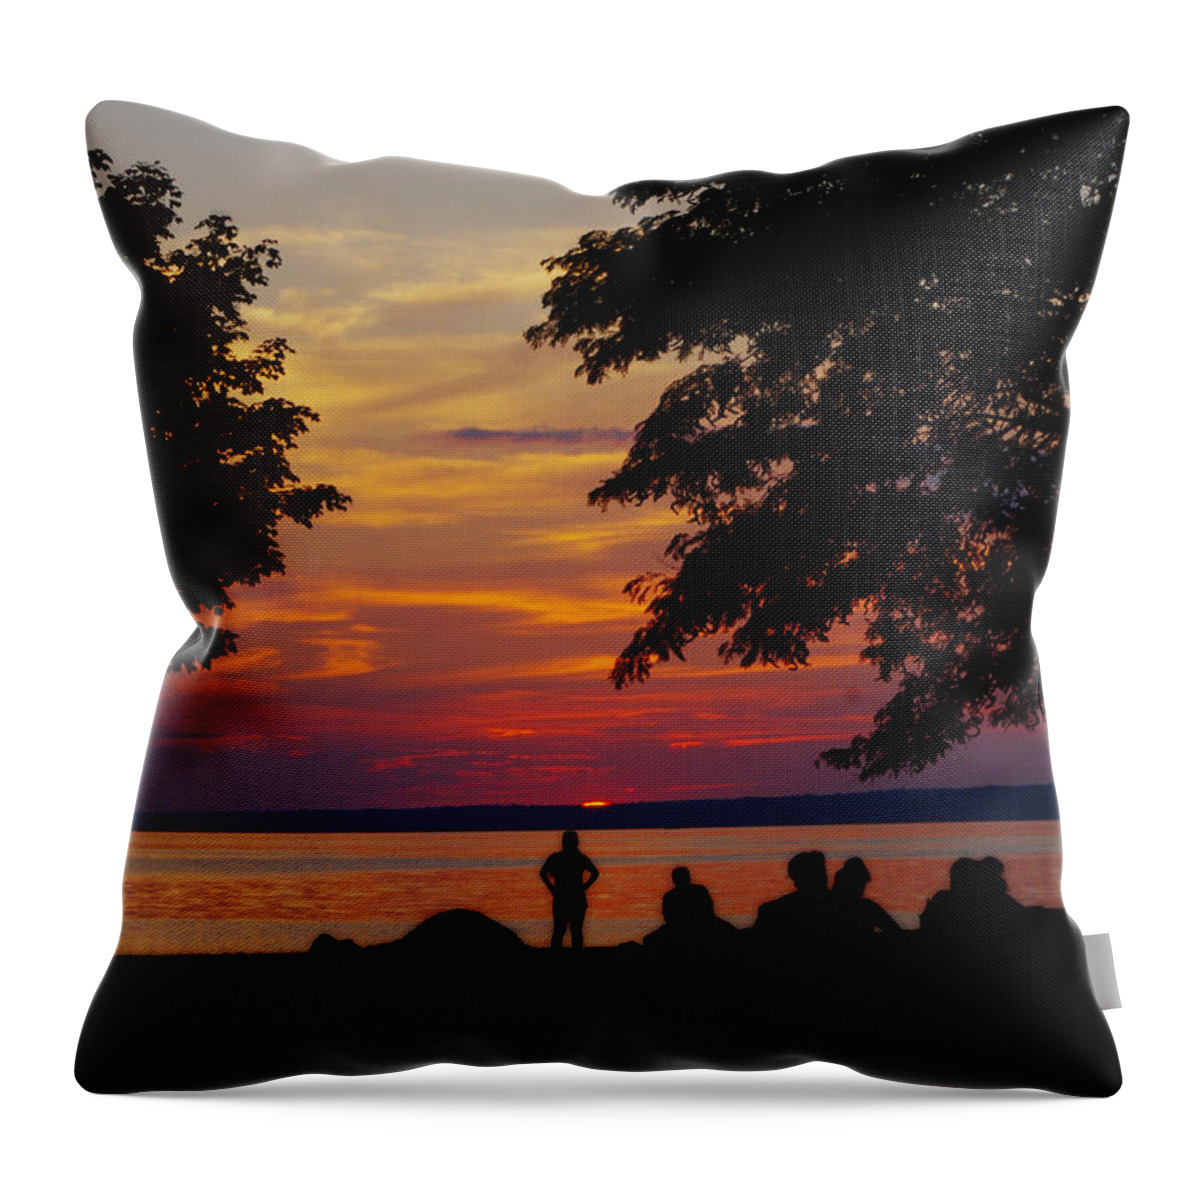 Lori Kingston Throw Pillow featuring the photograph Sunset at Sylvan Beach by Lori Kingston